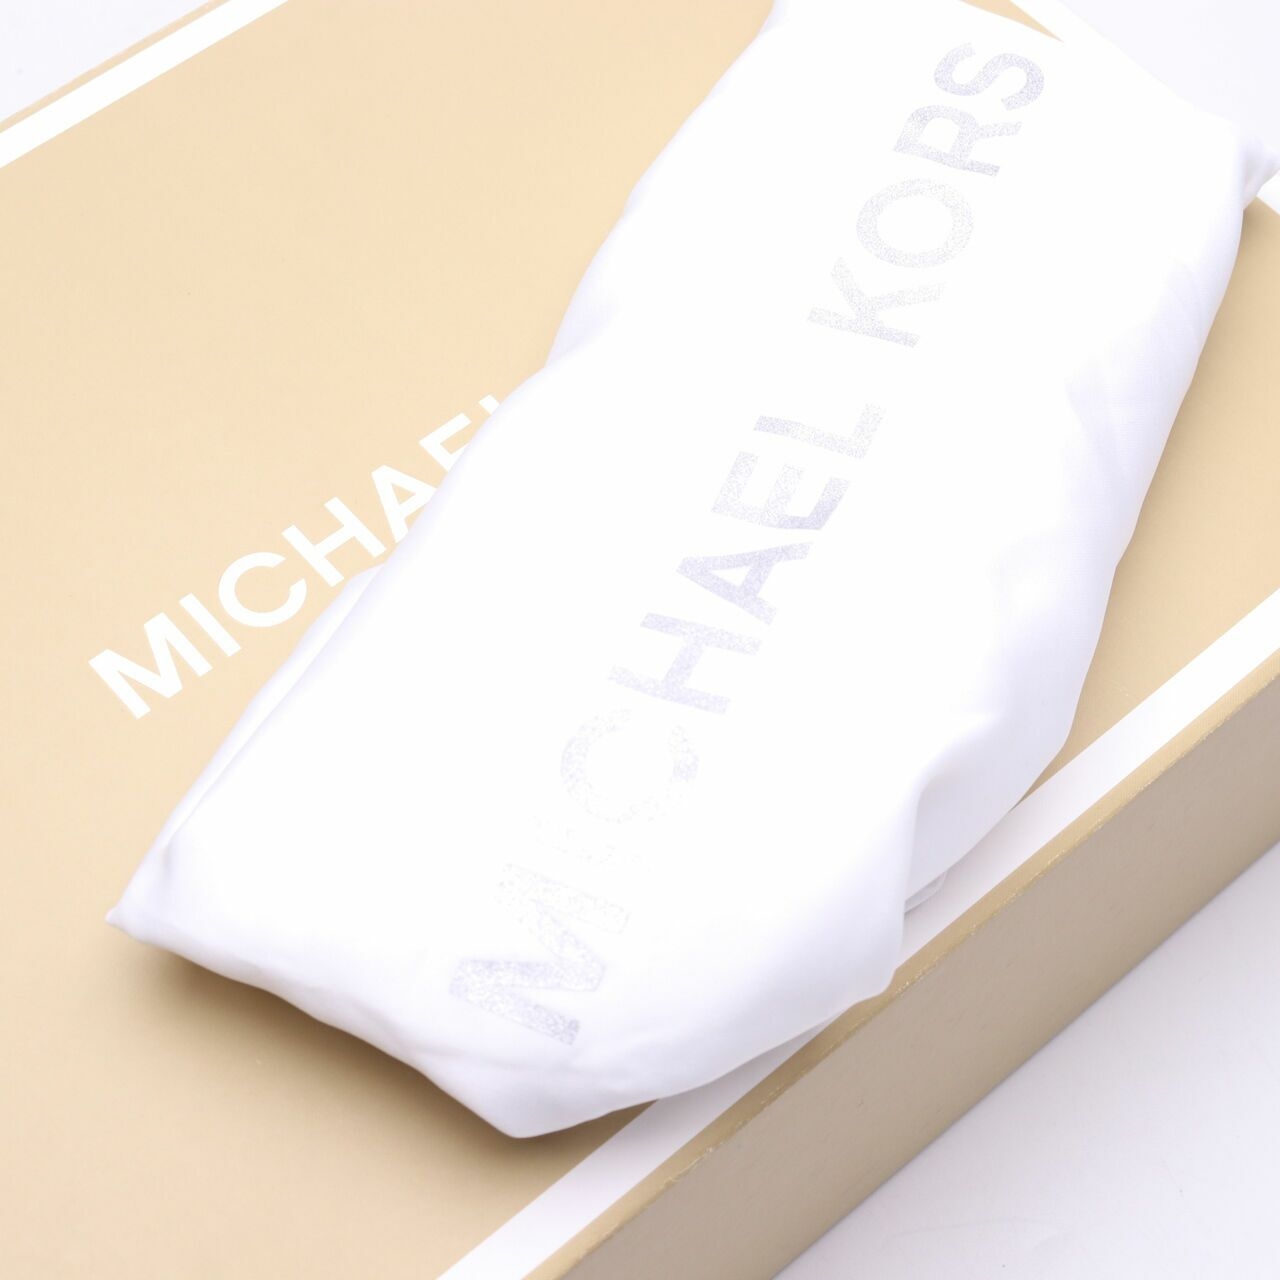 Michael Kors White/Gold Leather Waistpack